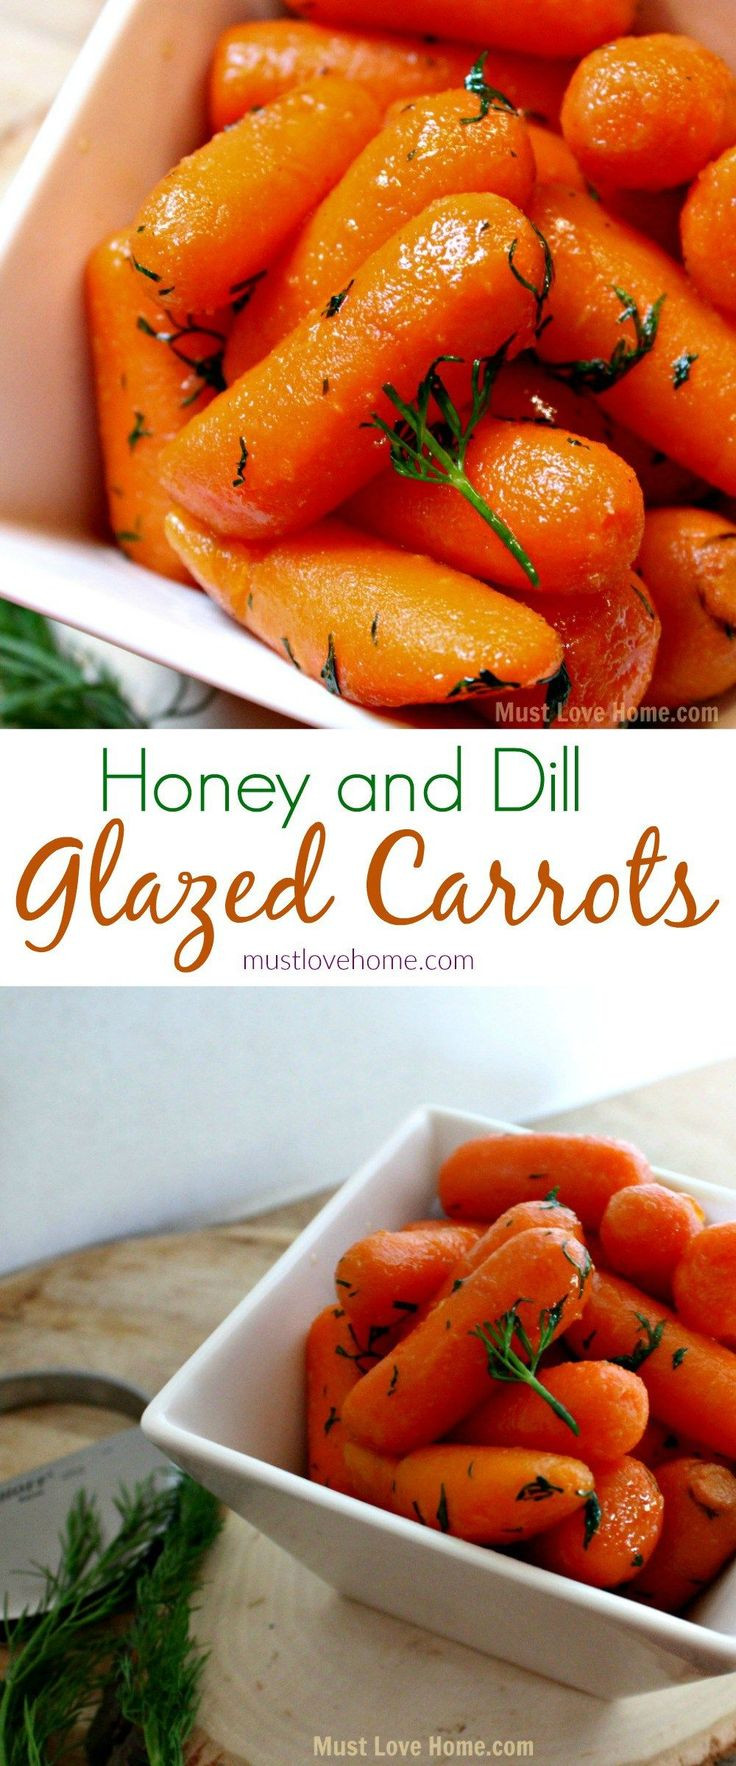 Carrot Recipes Vegetarian
 Best 25 Glazed carrots ideas on Pinterest